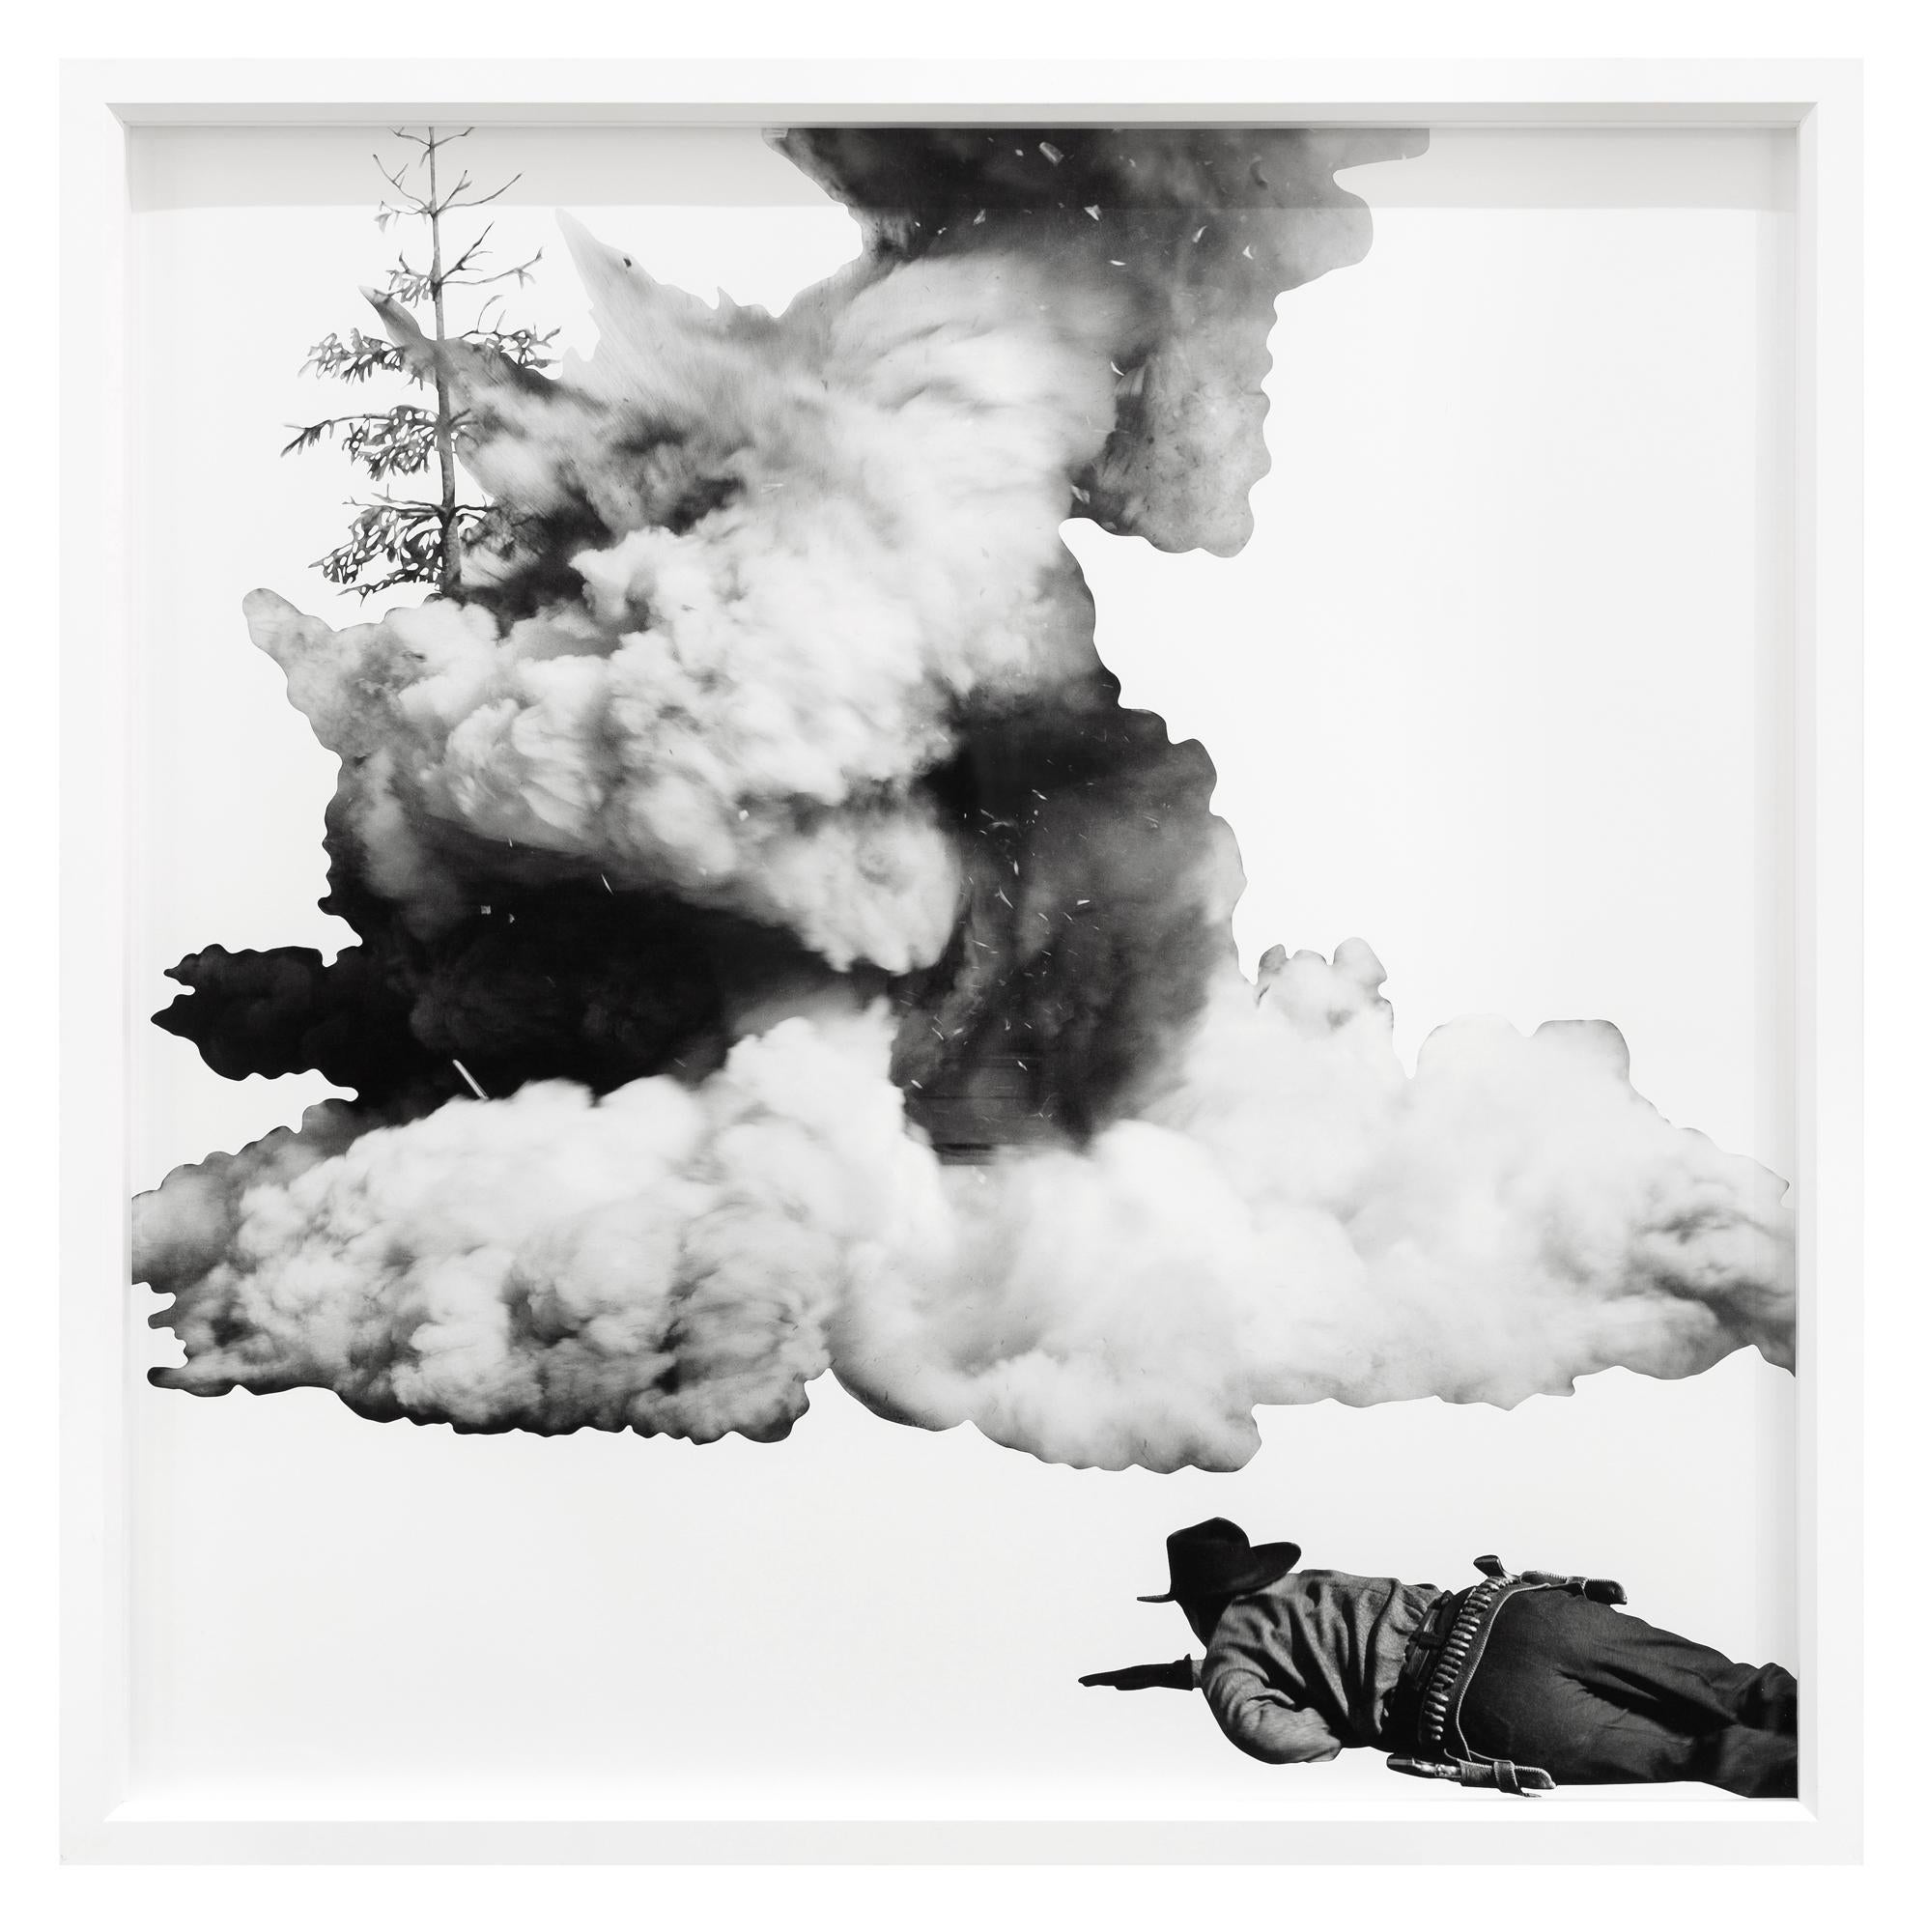 Smoke, Tree, Shadow, and Person - Print by John Baldessari